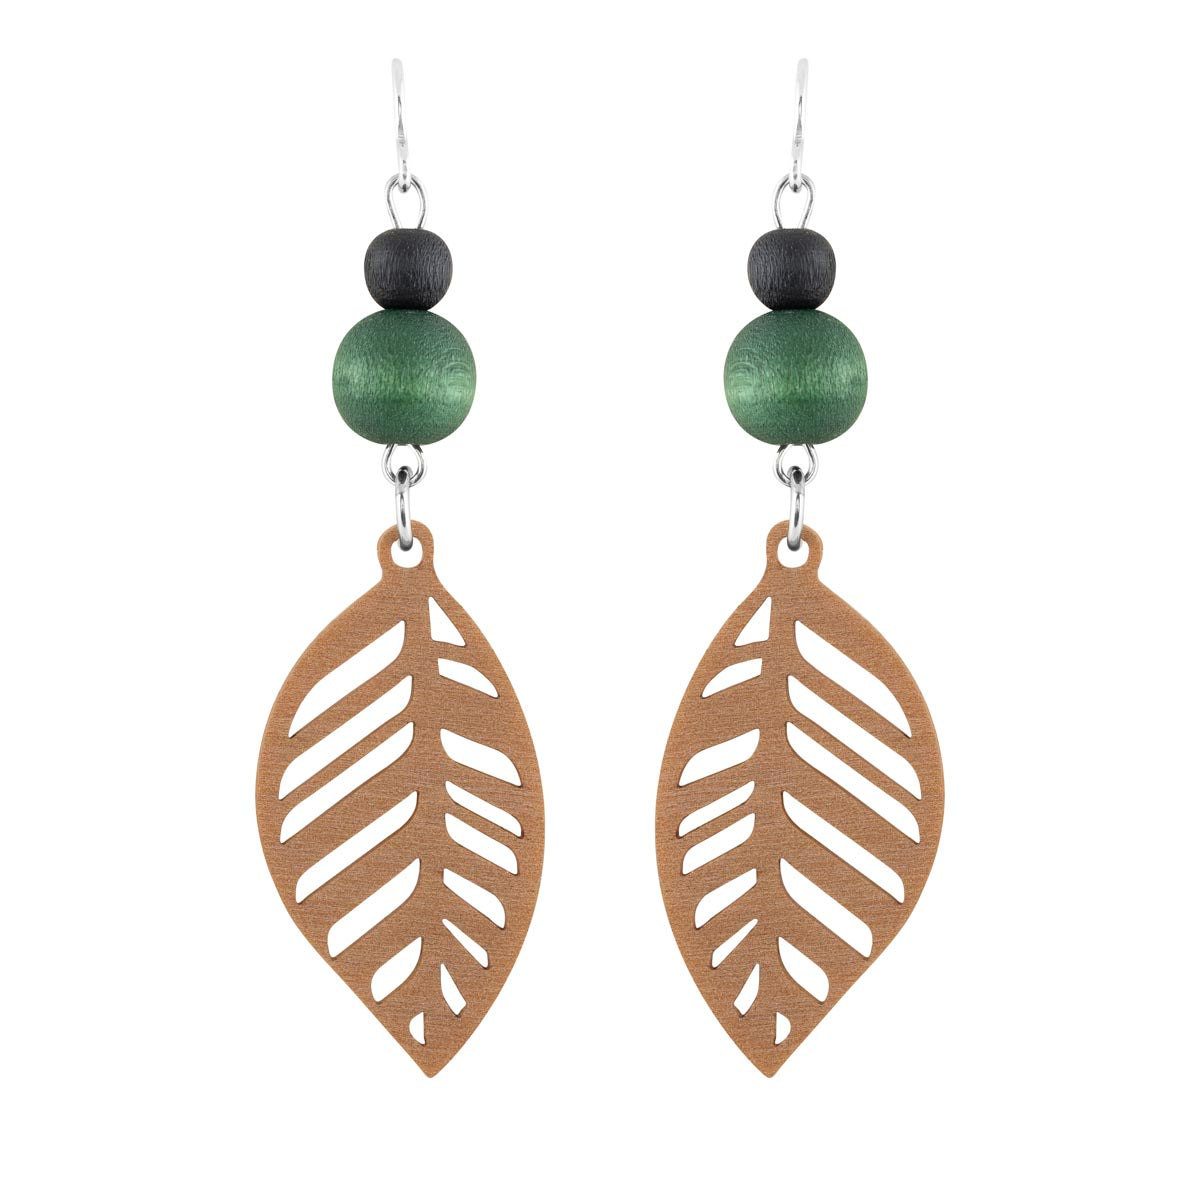 Hopeapihlaja earrings, black and green